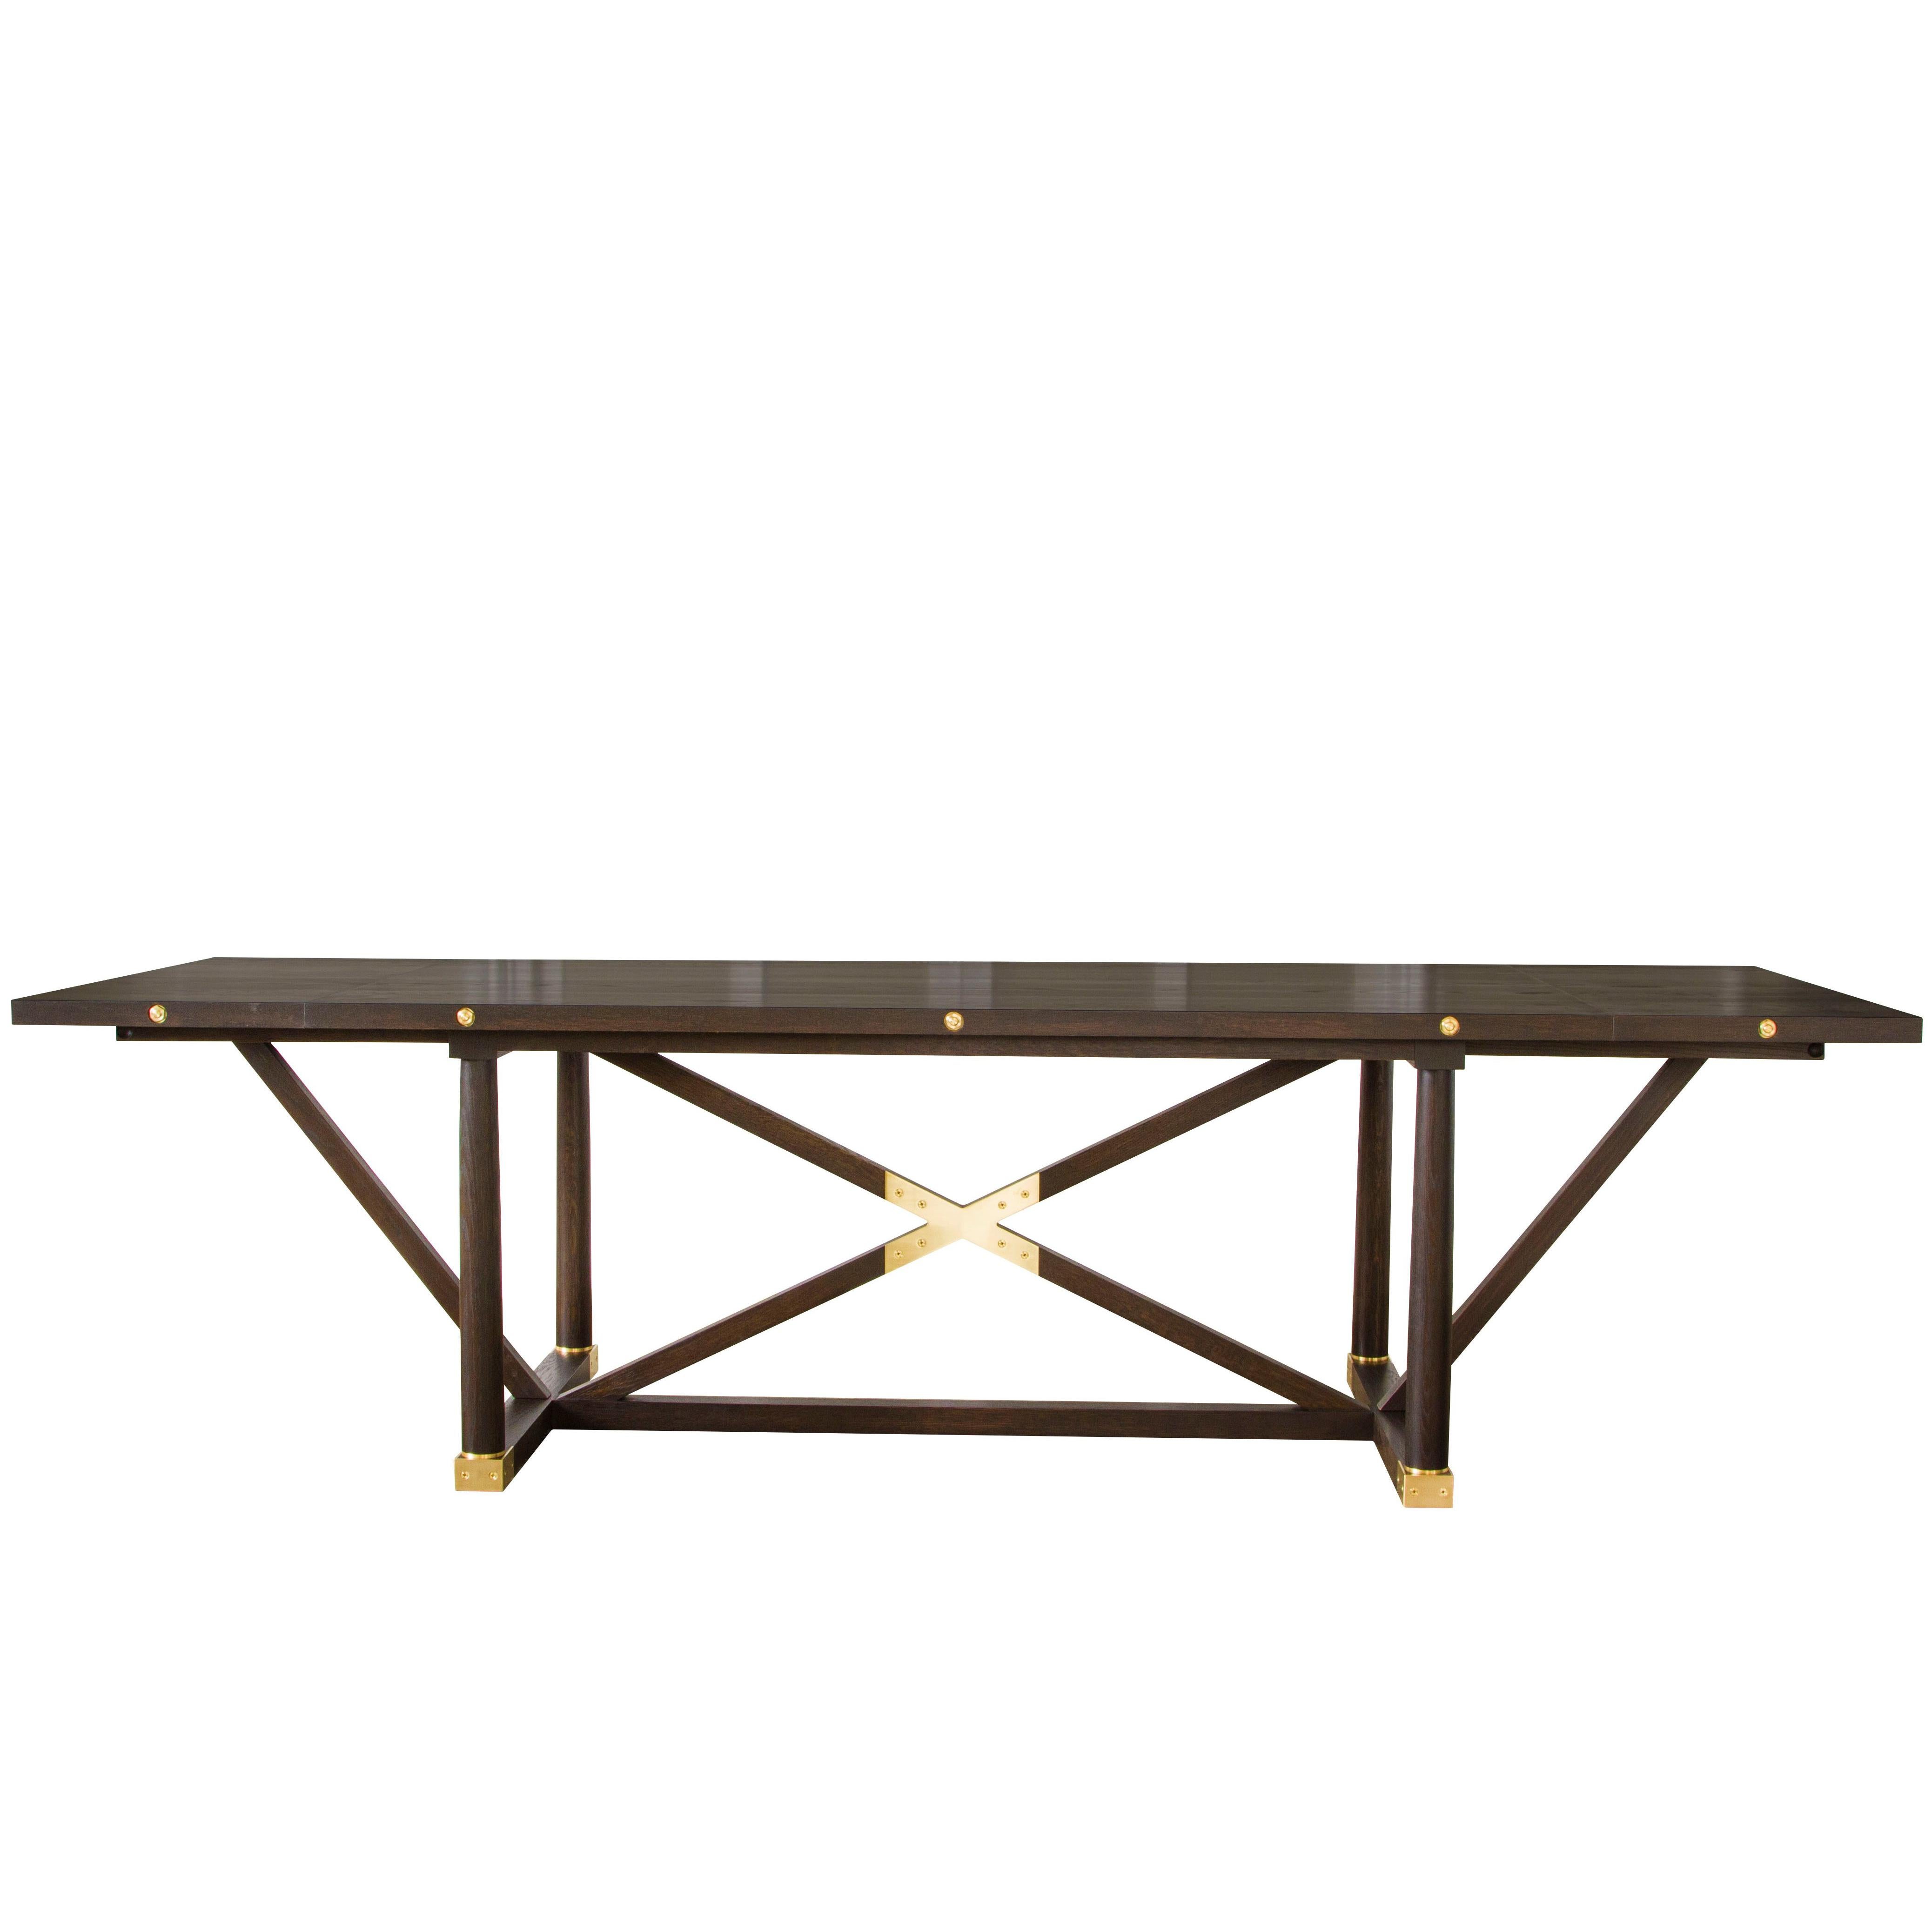 Carden Table in Ebonized White Oak - handcrafted by Richard Wrightman Design